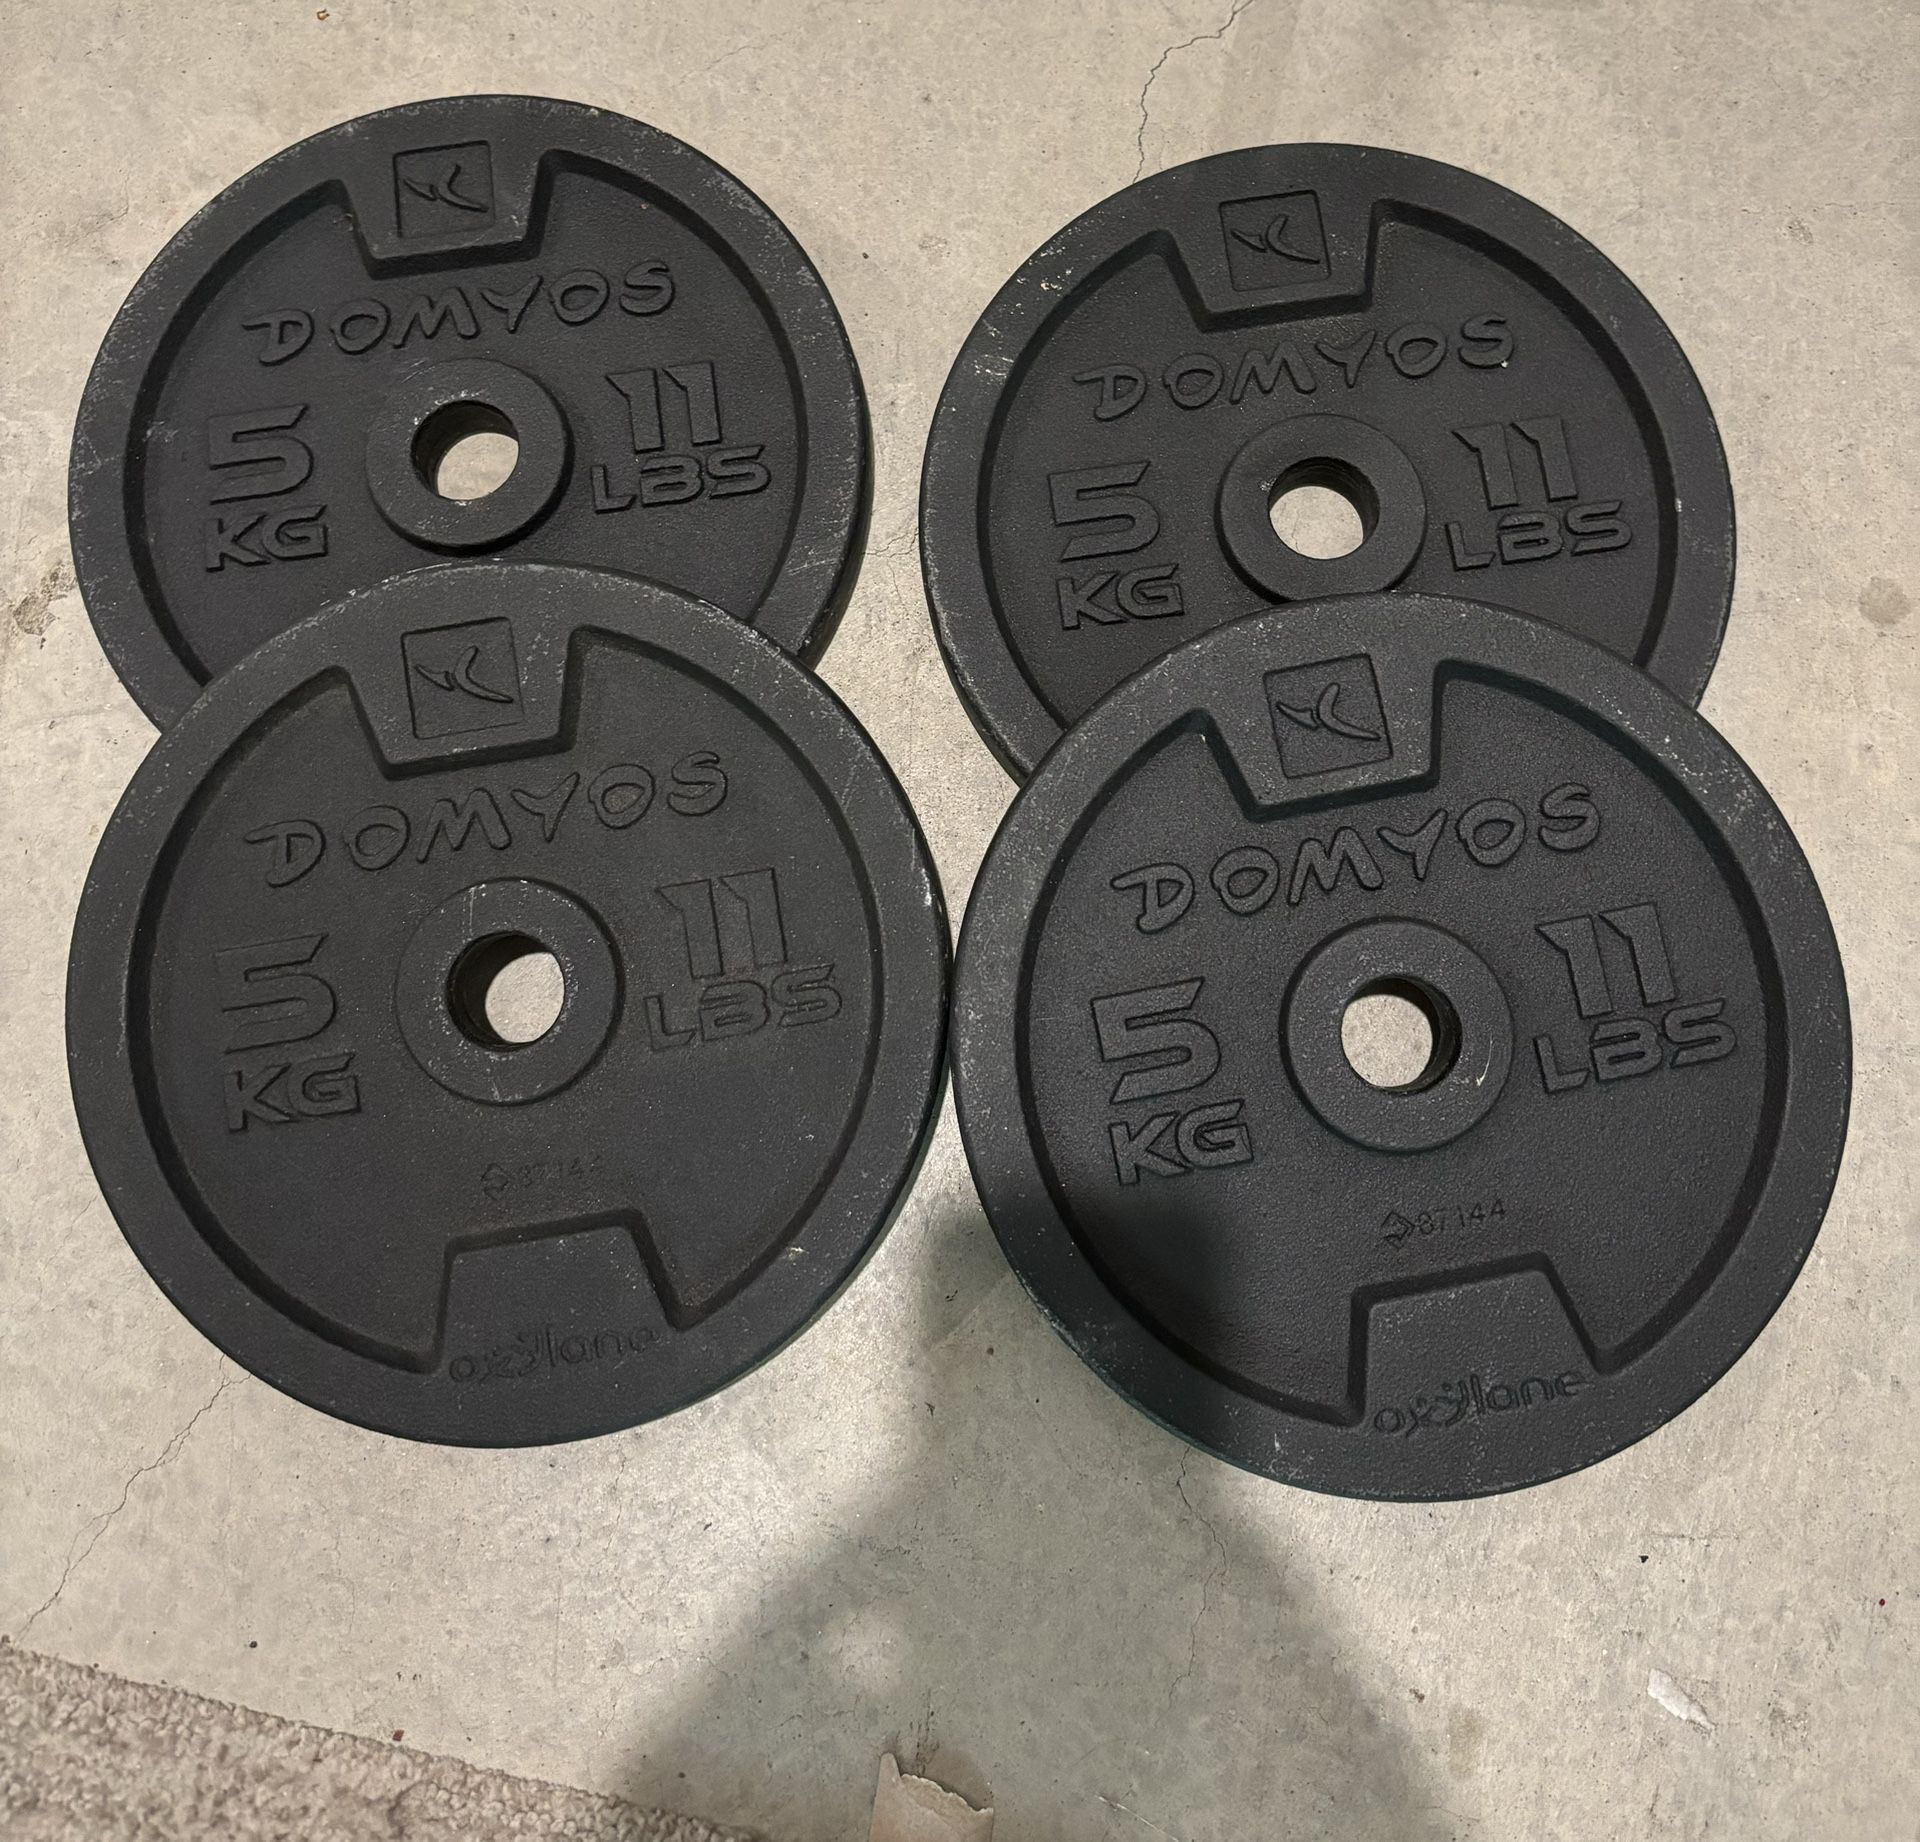 Domyos Cast Iron Weight Training Discs, 4 x 11lbs 